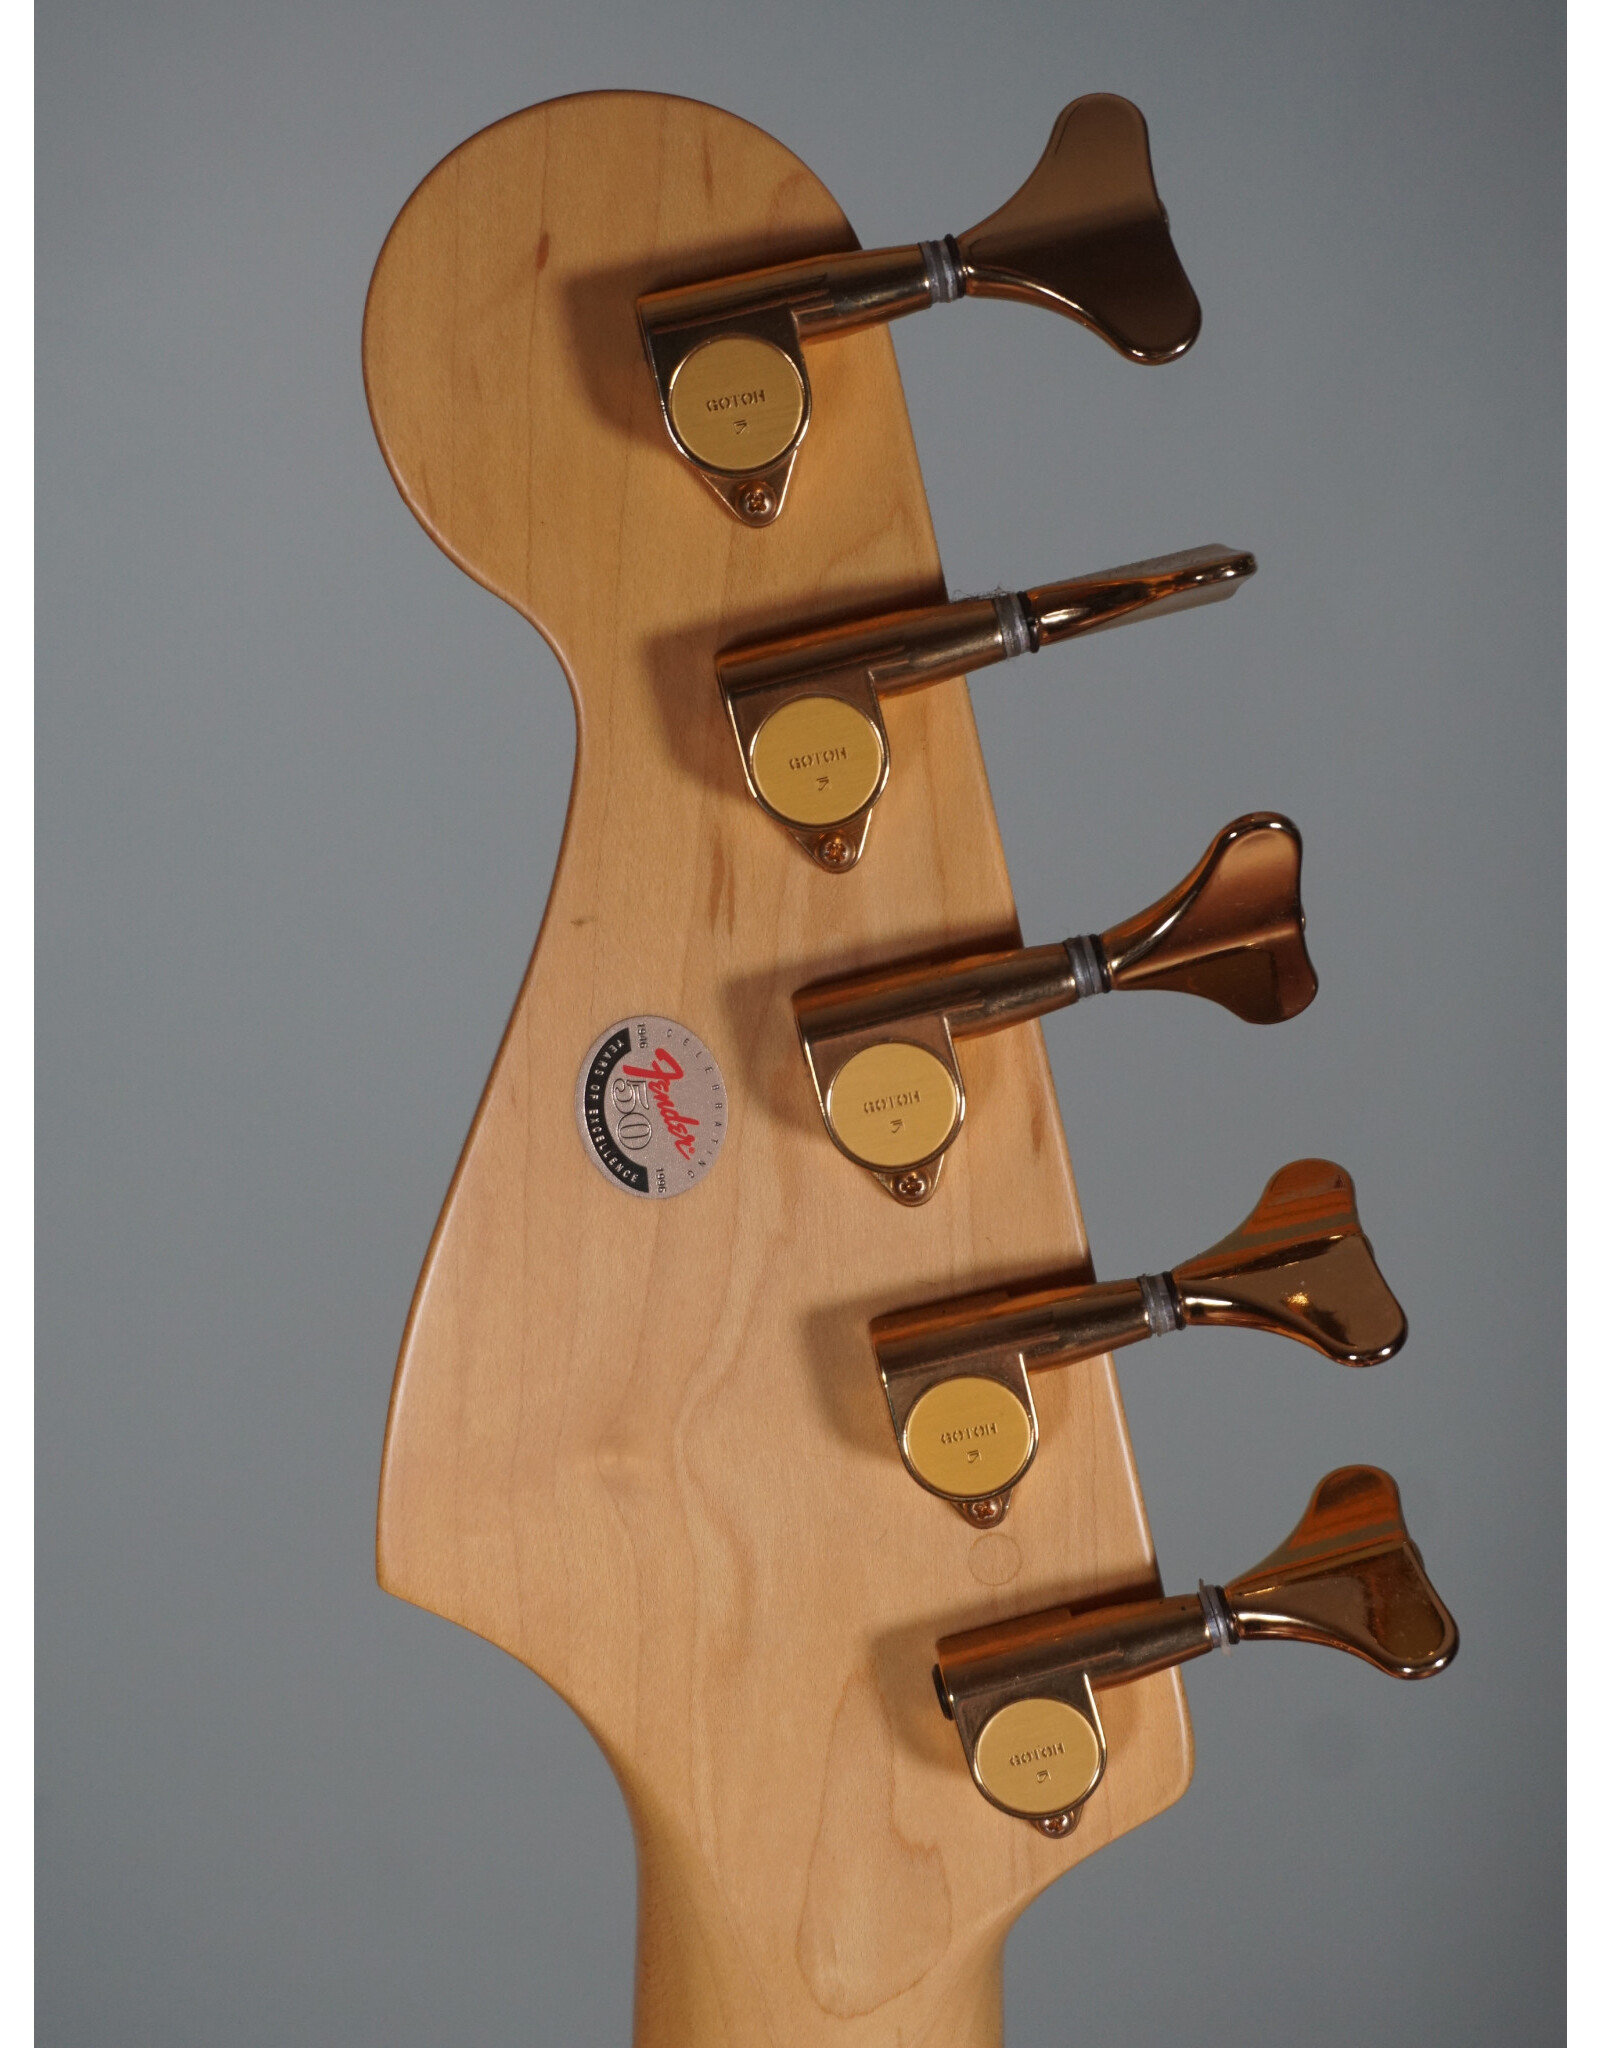 Fender 1996 Fender 50th Anniversary American Standard Jazz Bass V w/ Gig Bag, Used